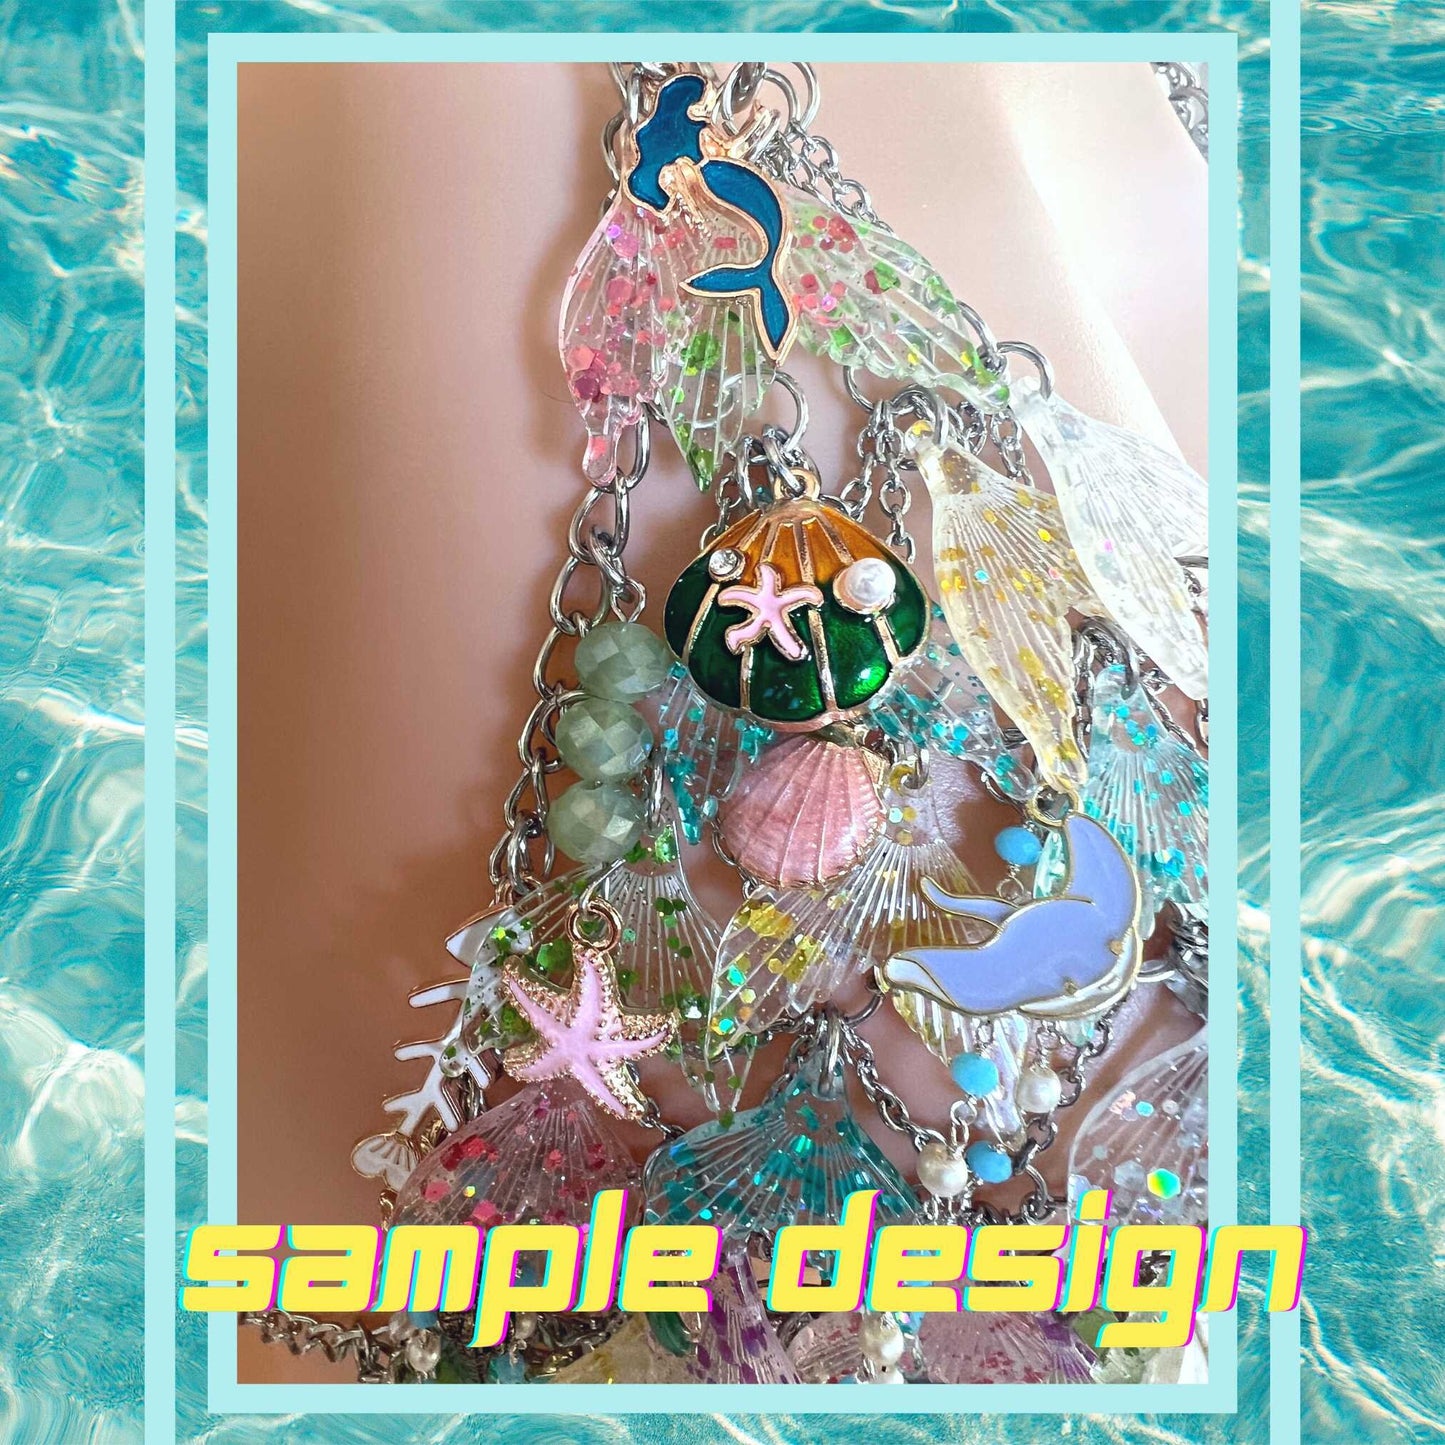 Mermaid Custom Chain Top Mermaid Charm Necklace Personalized Rave Outfit Mermaidcore Top With Ocean Charms Mermaid Costume Underwater Colors